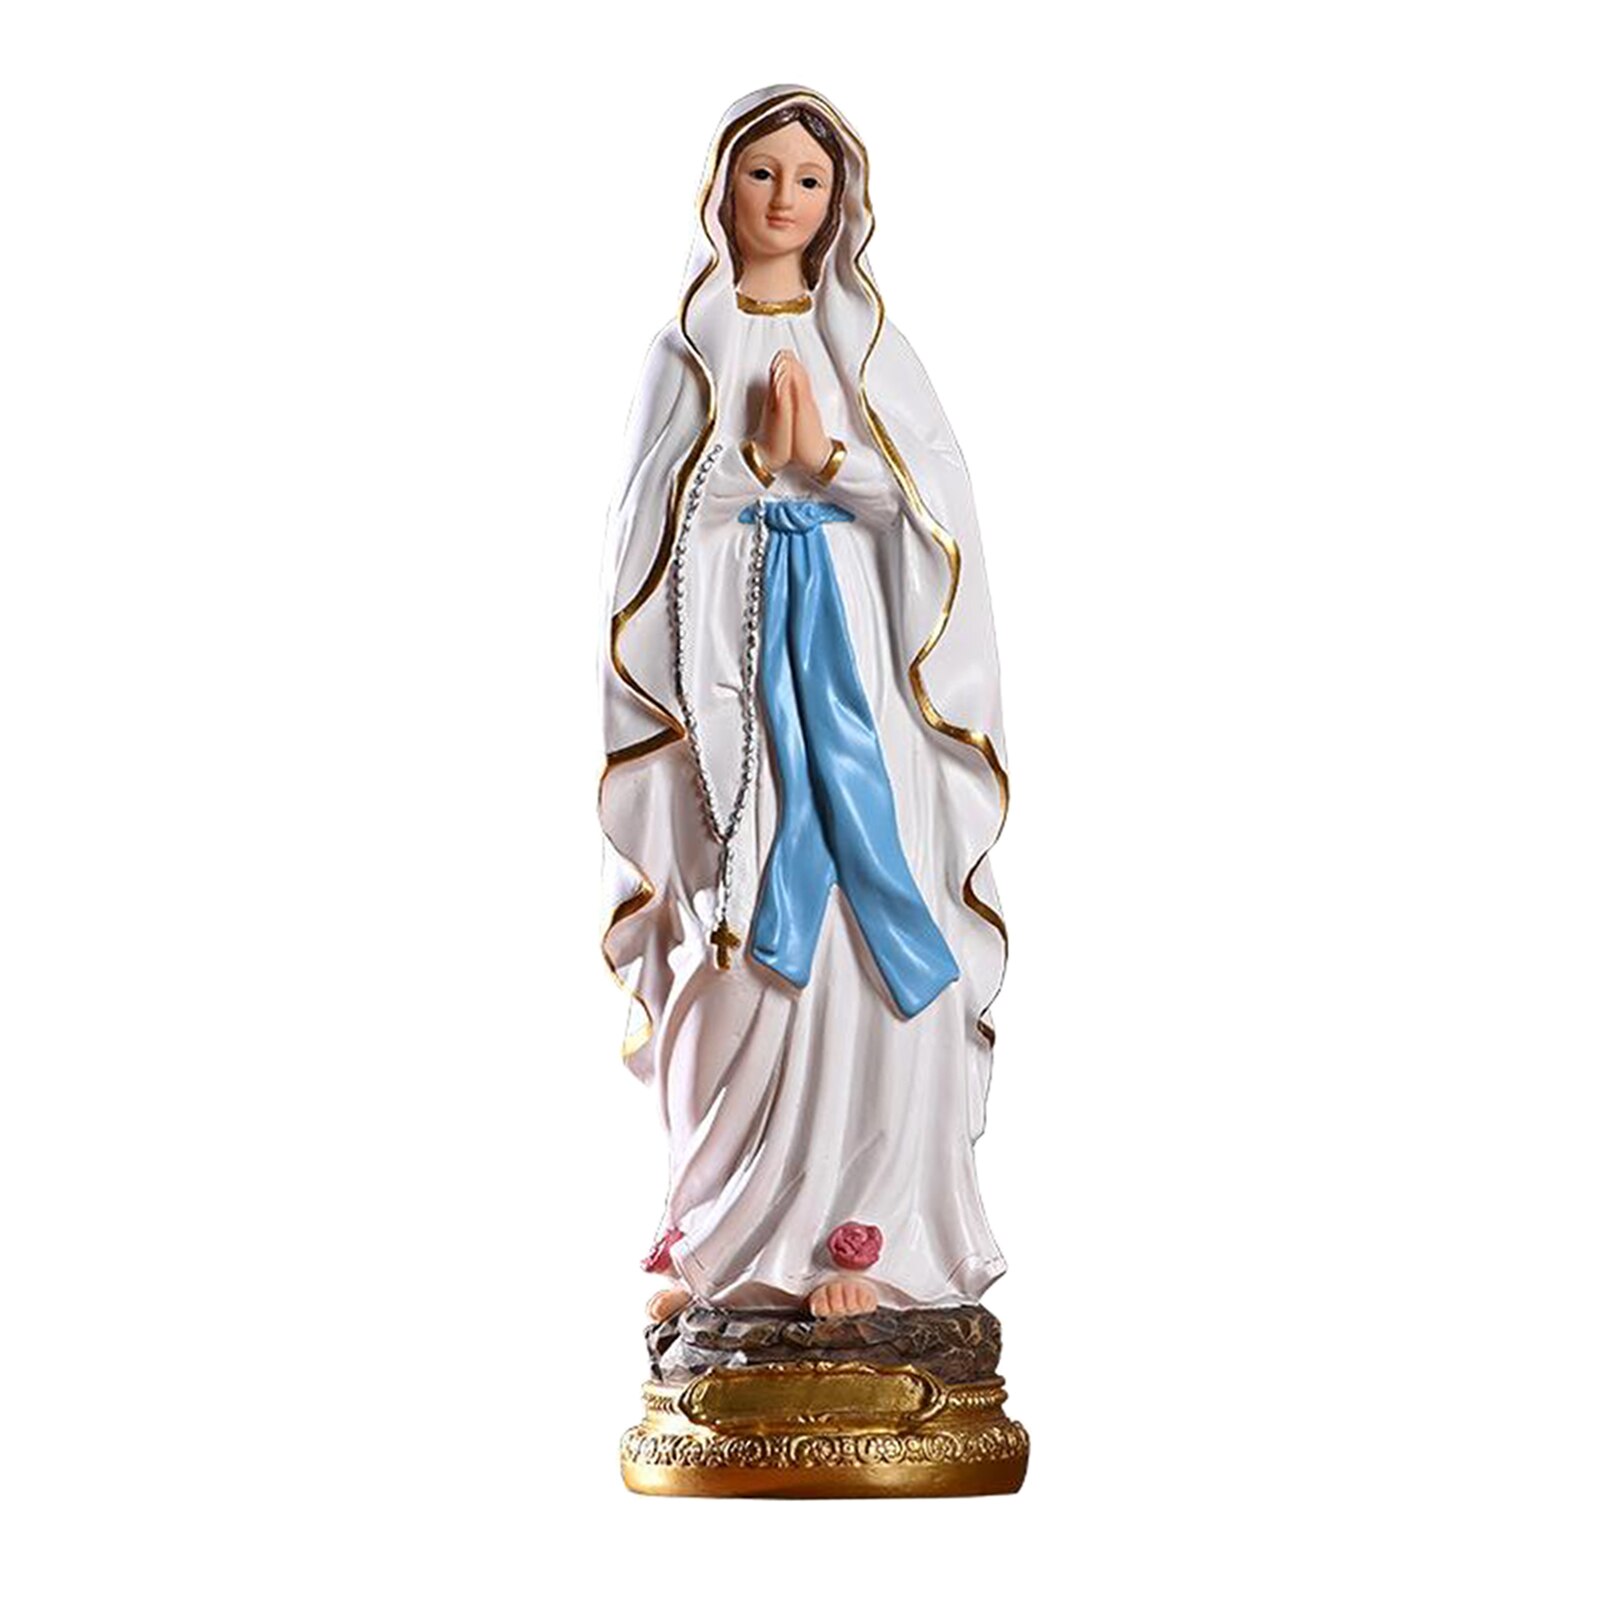 30Cm Katholieke Hars Onze Dame Van Lourdes Virgin Mary Standbeeld Figuur Thuis